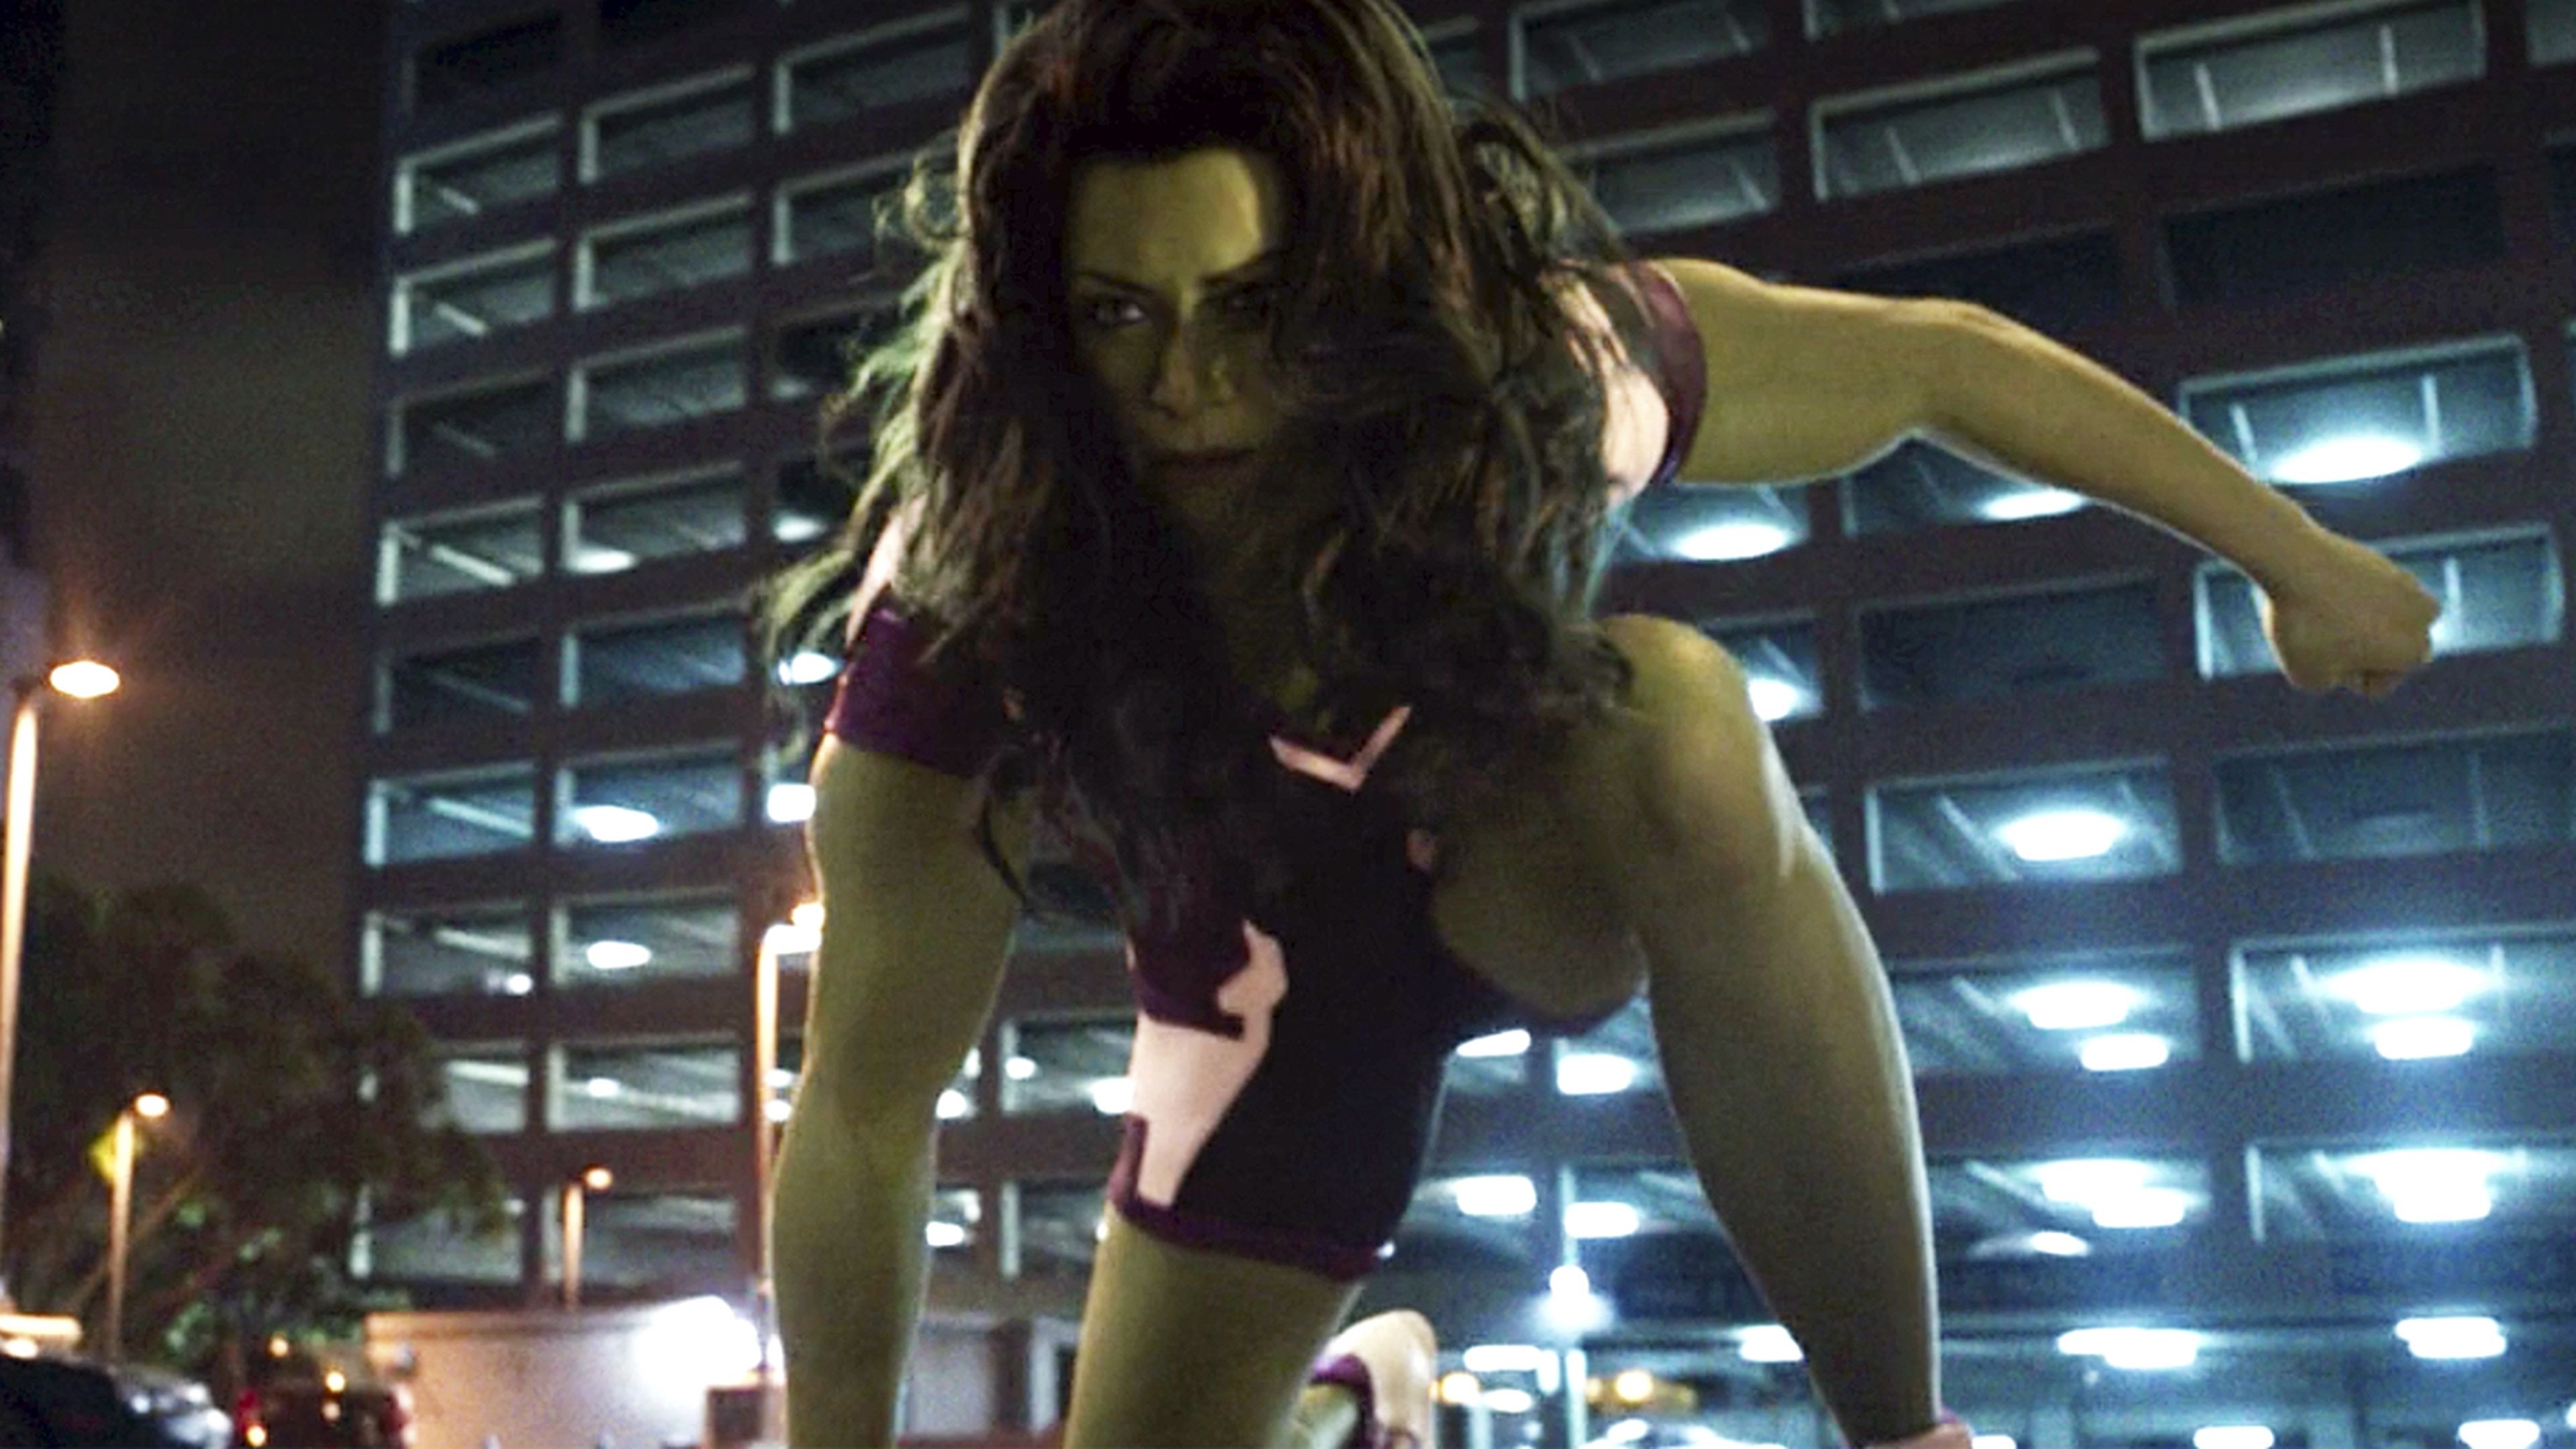 Críticas de la serie She-Hulk: Abogada Hulka 